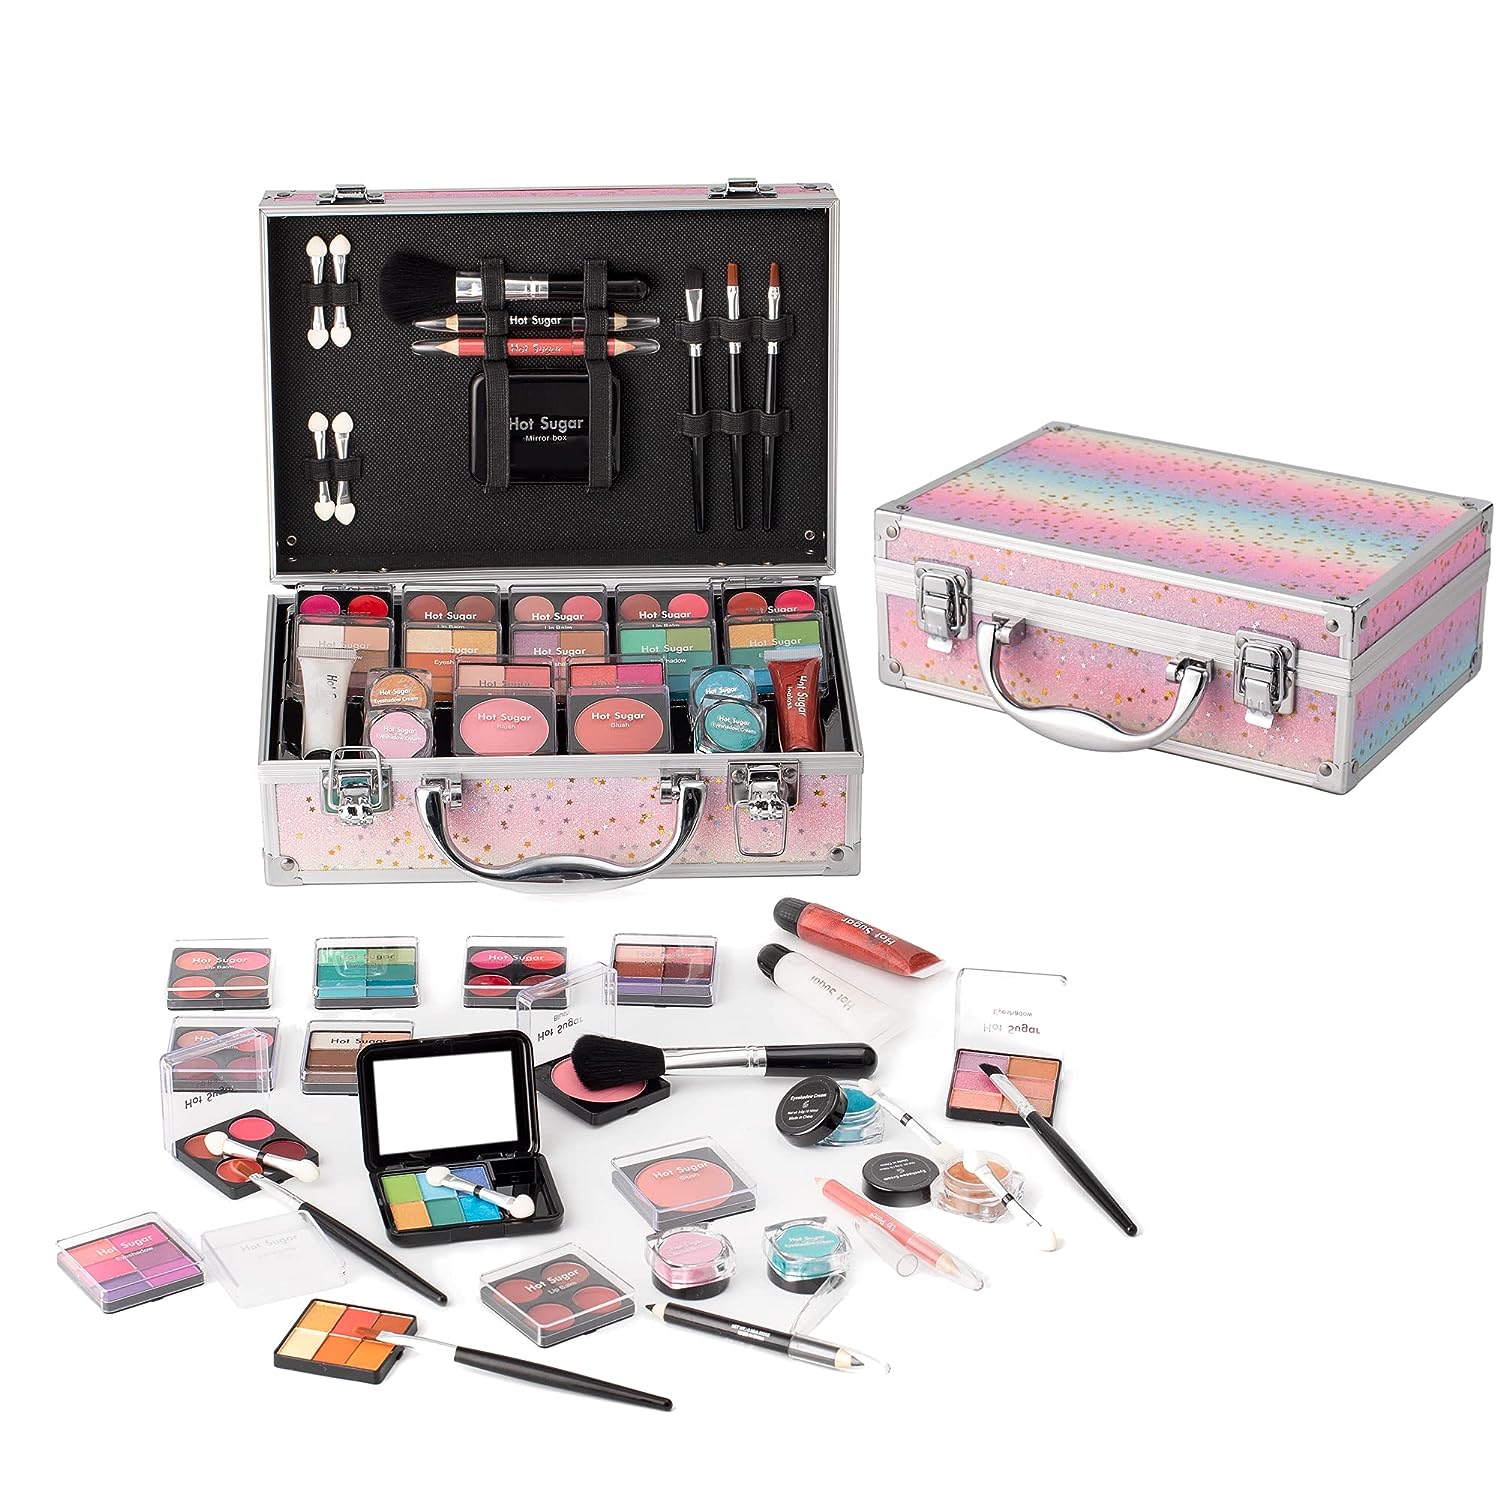 The best Christmas gift ideas for teen girls: Hot Sugar makeup kit